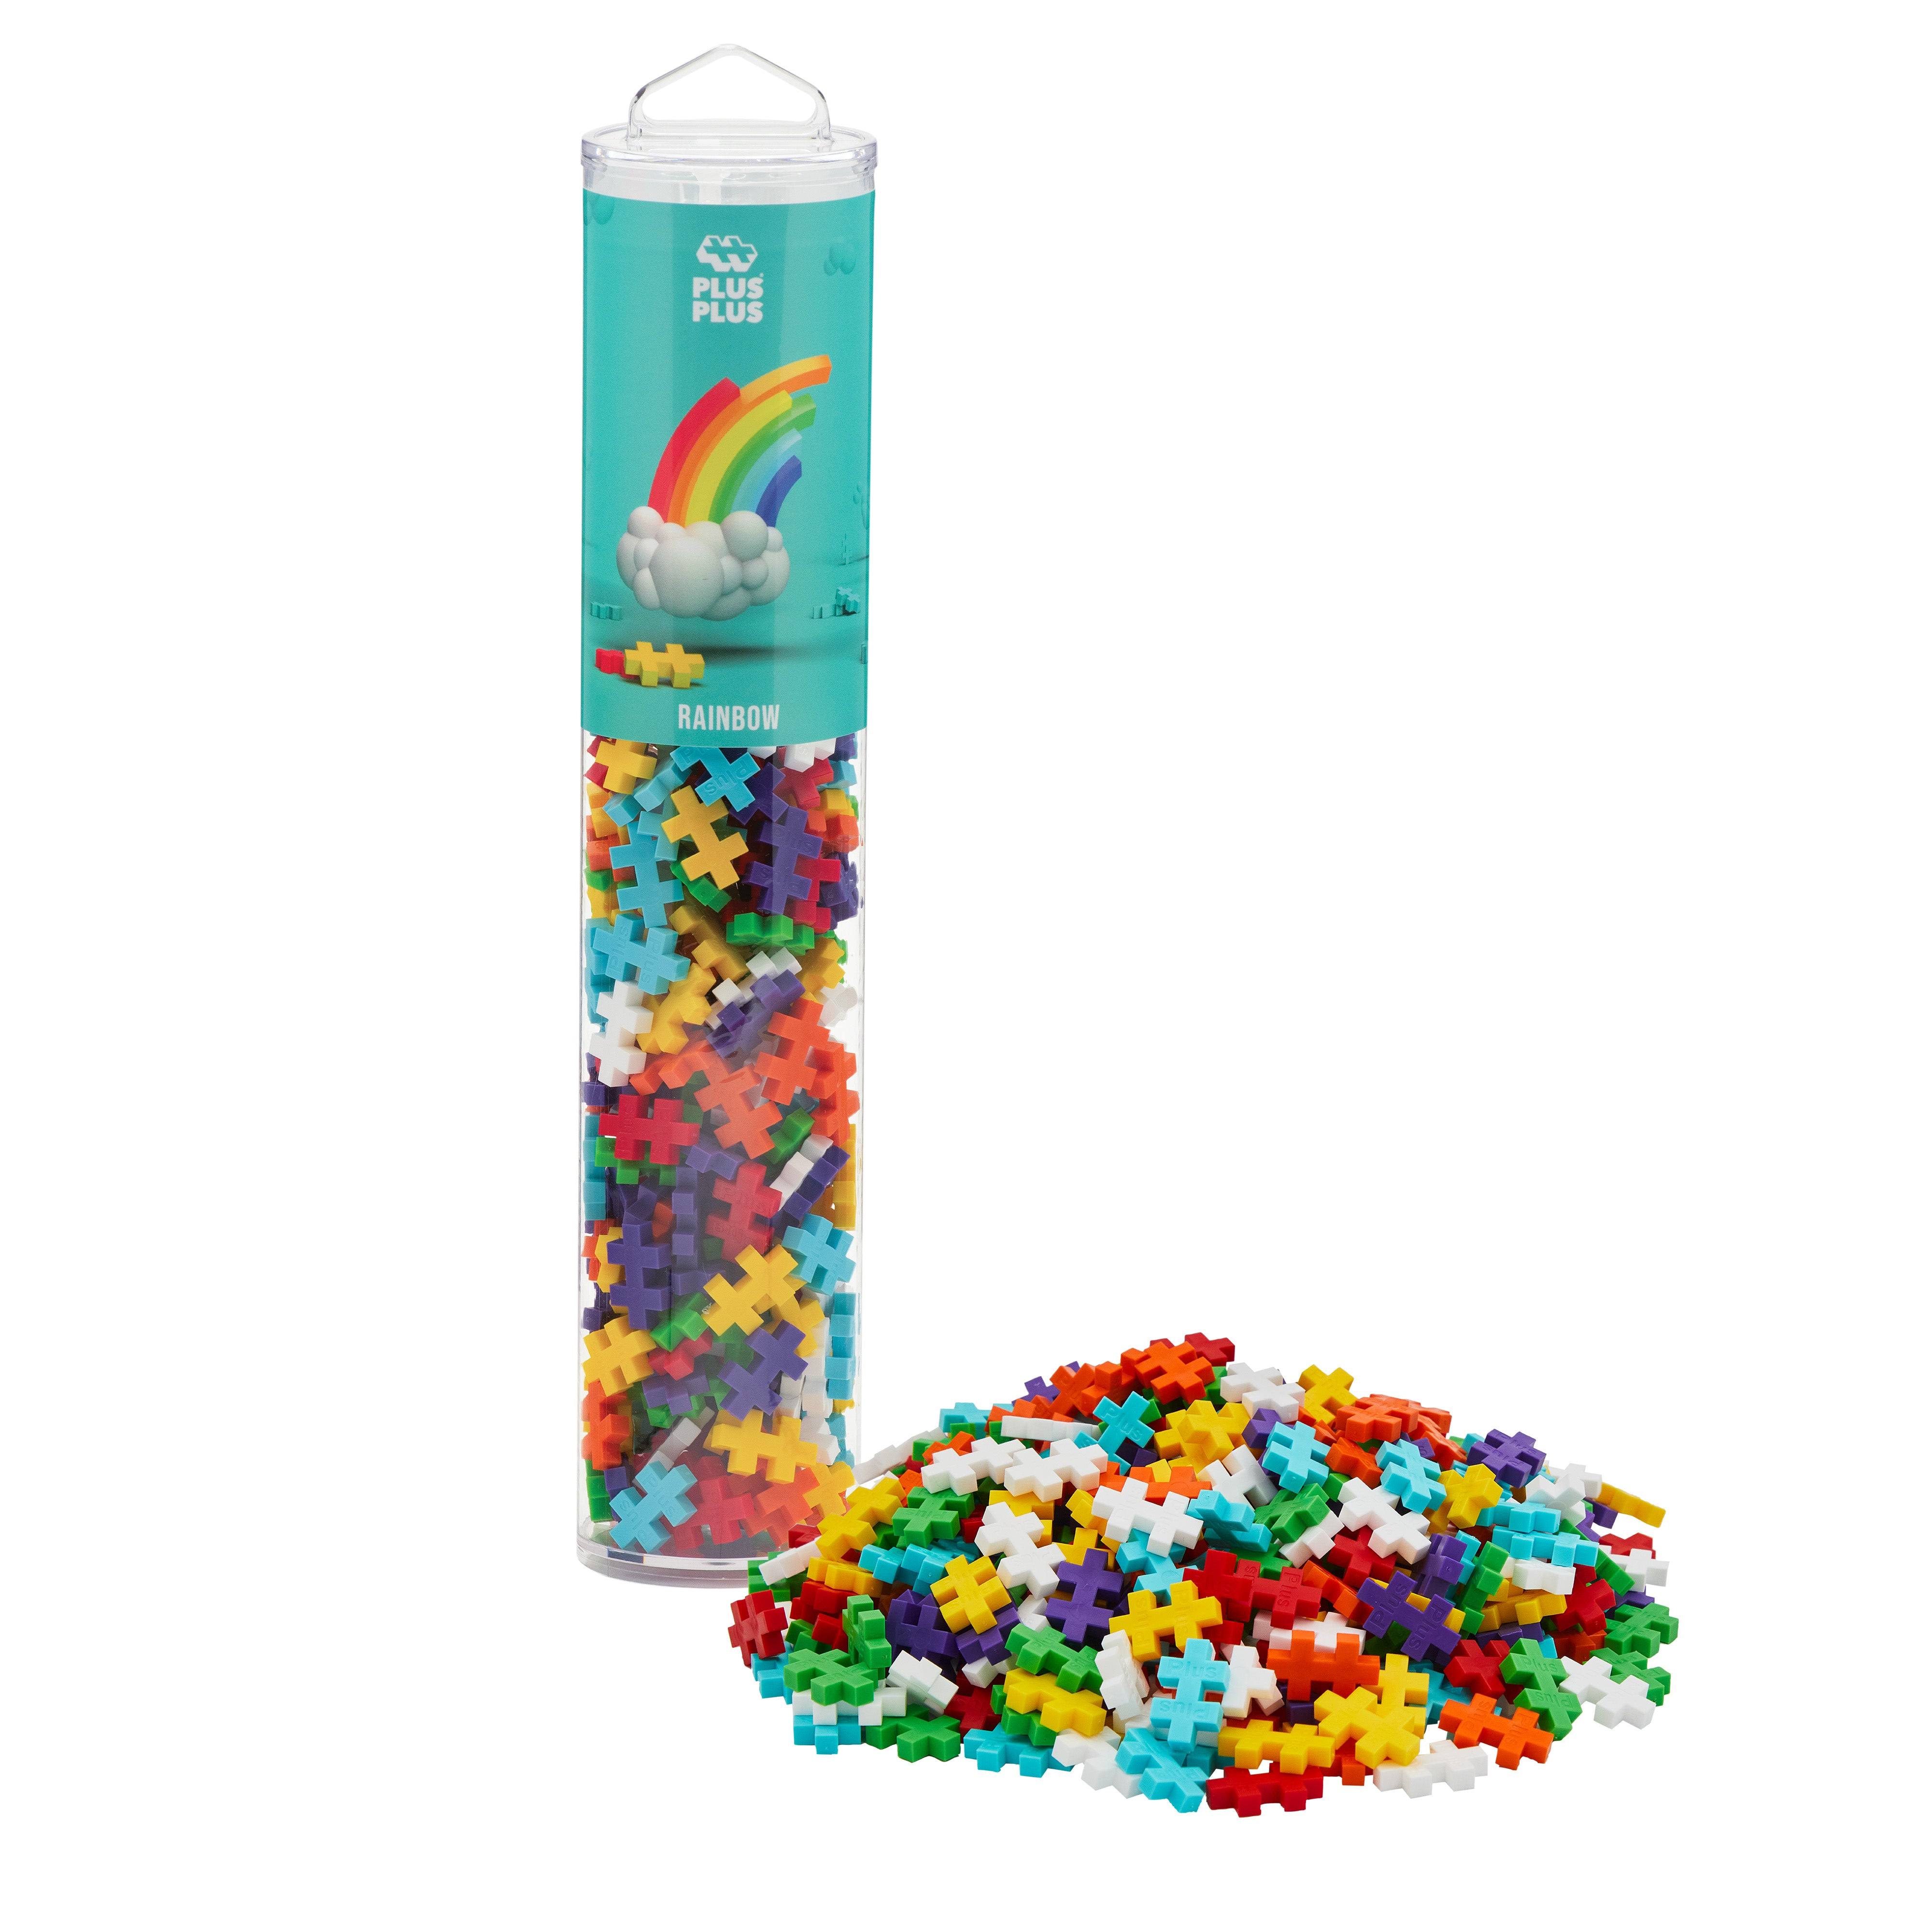 Plus Plus - Open Play Tube - 240 Piece Rainbow Mix - Construction Building Stem / Steam Toy, Interlocking Mini Puzzle Blocks For Kids